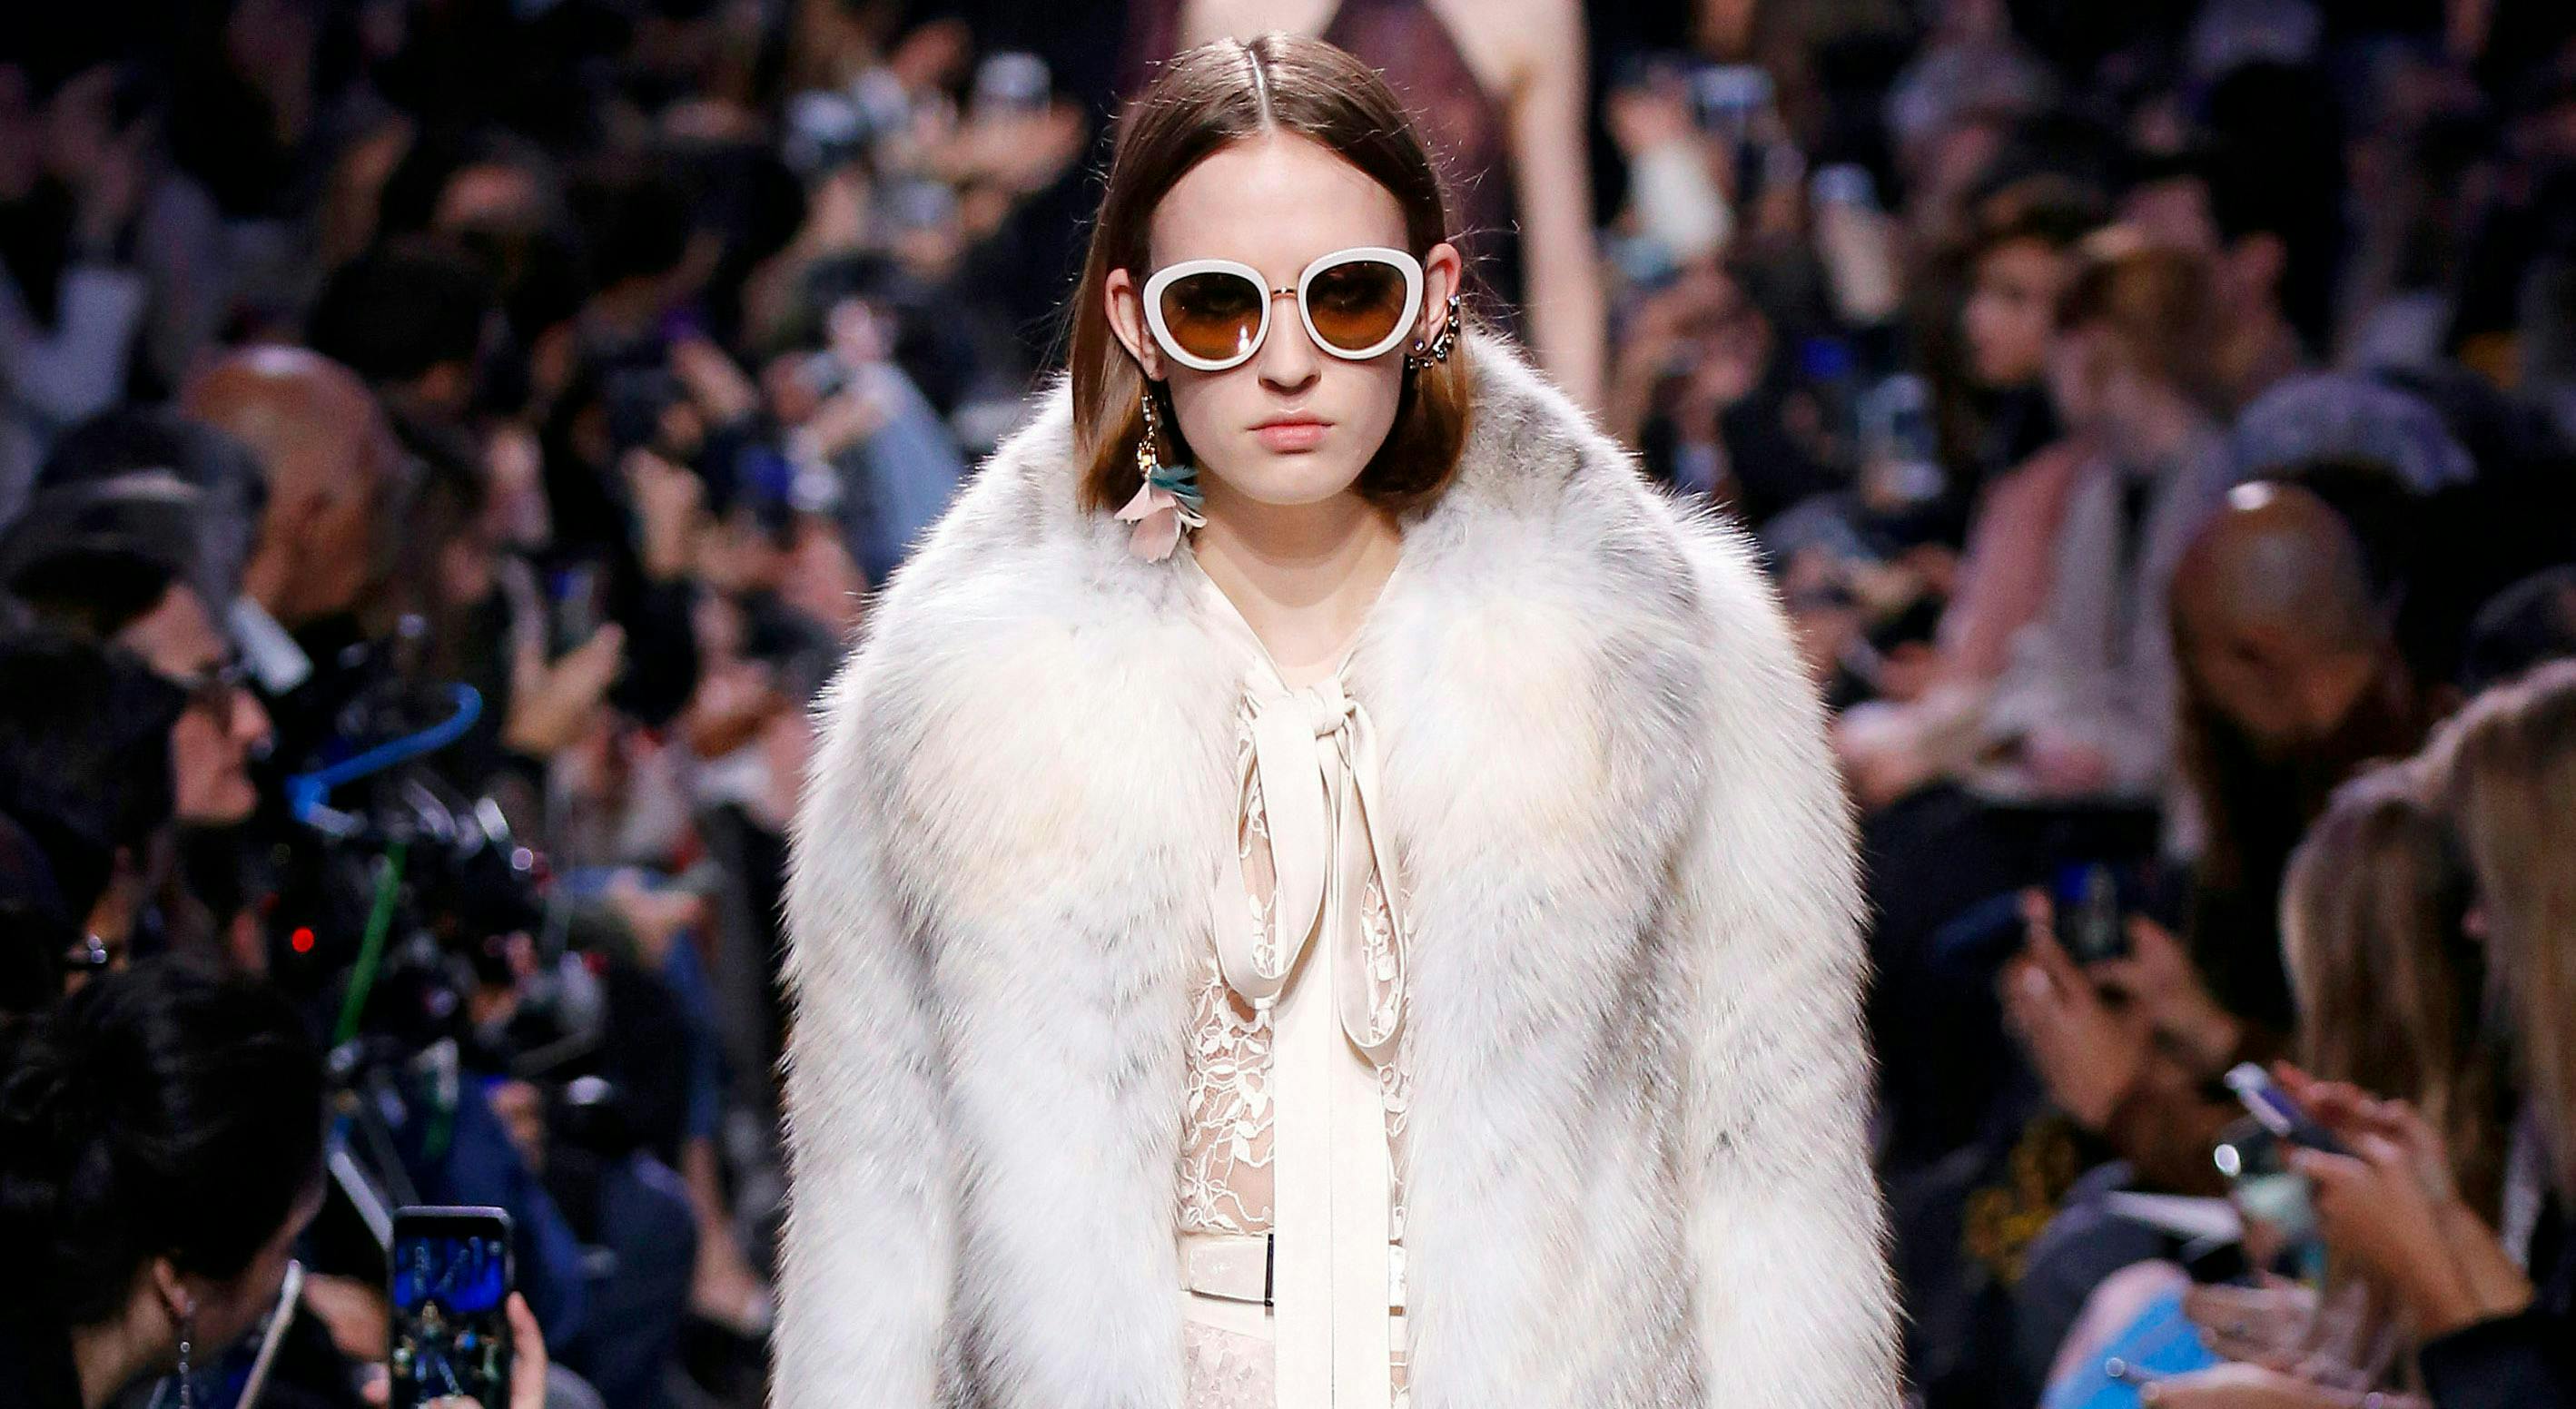 elie_saab_ ready to wear fall winter 2017-18 paris fashion week march 2017 sunglasses accessories accessory person human fur